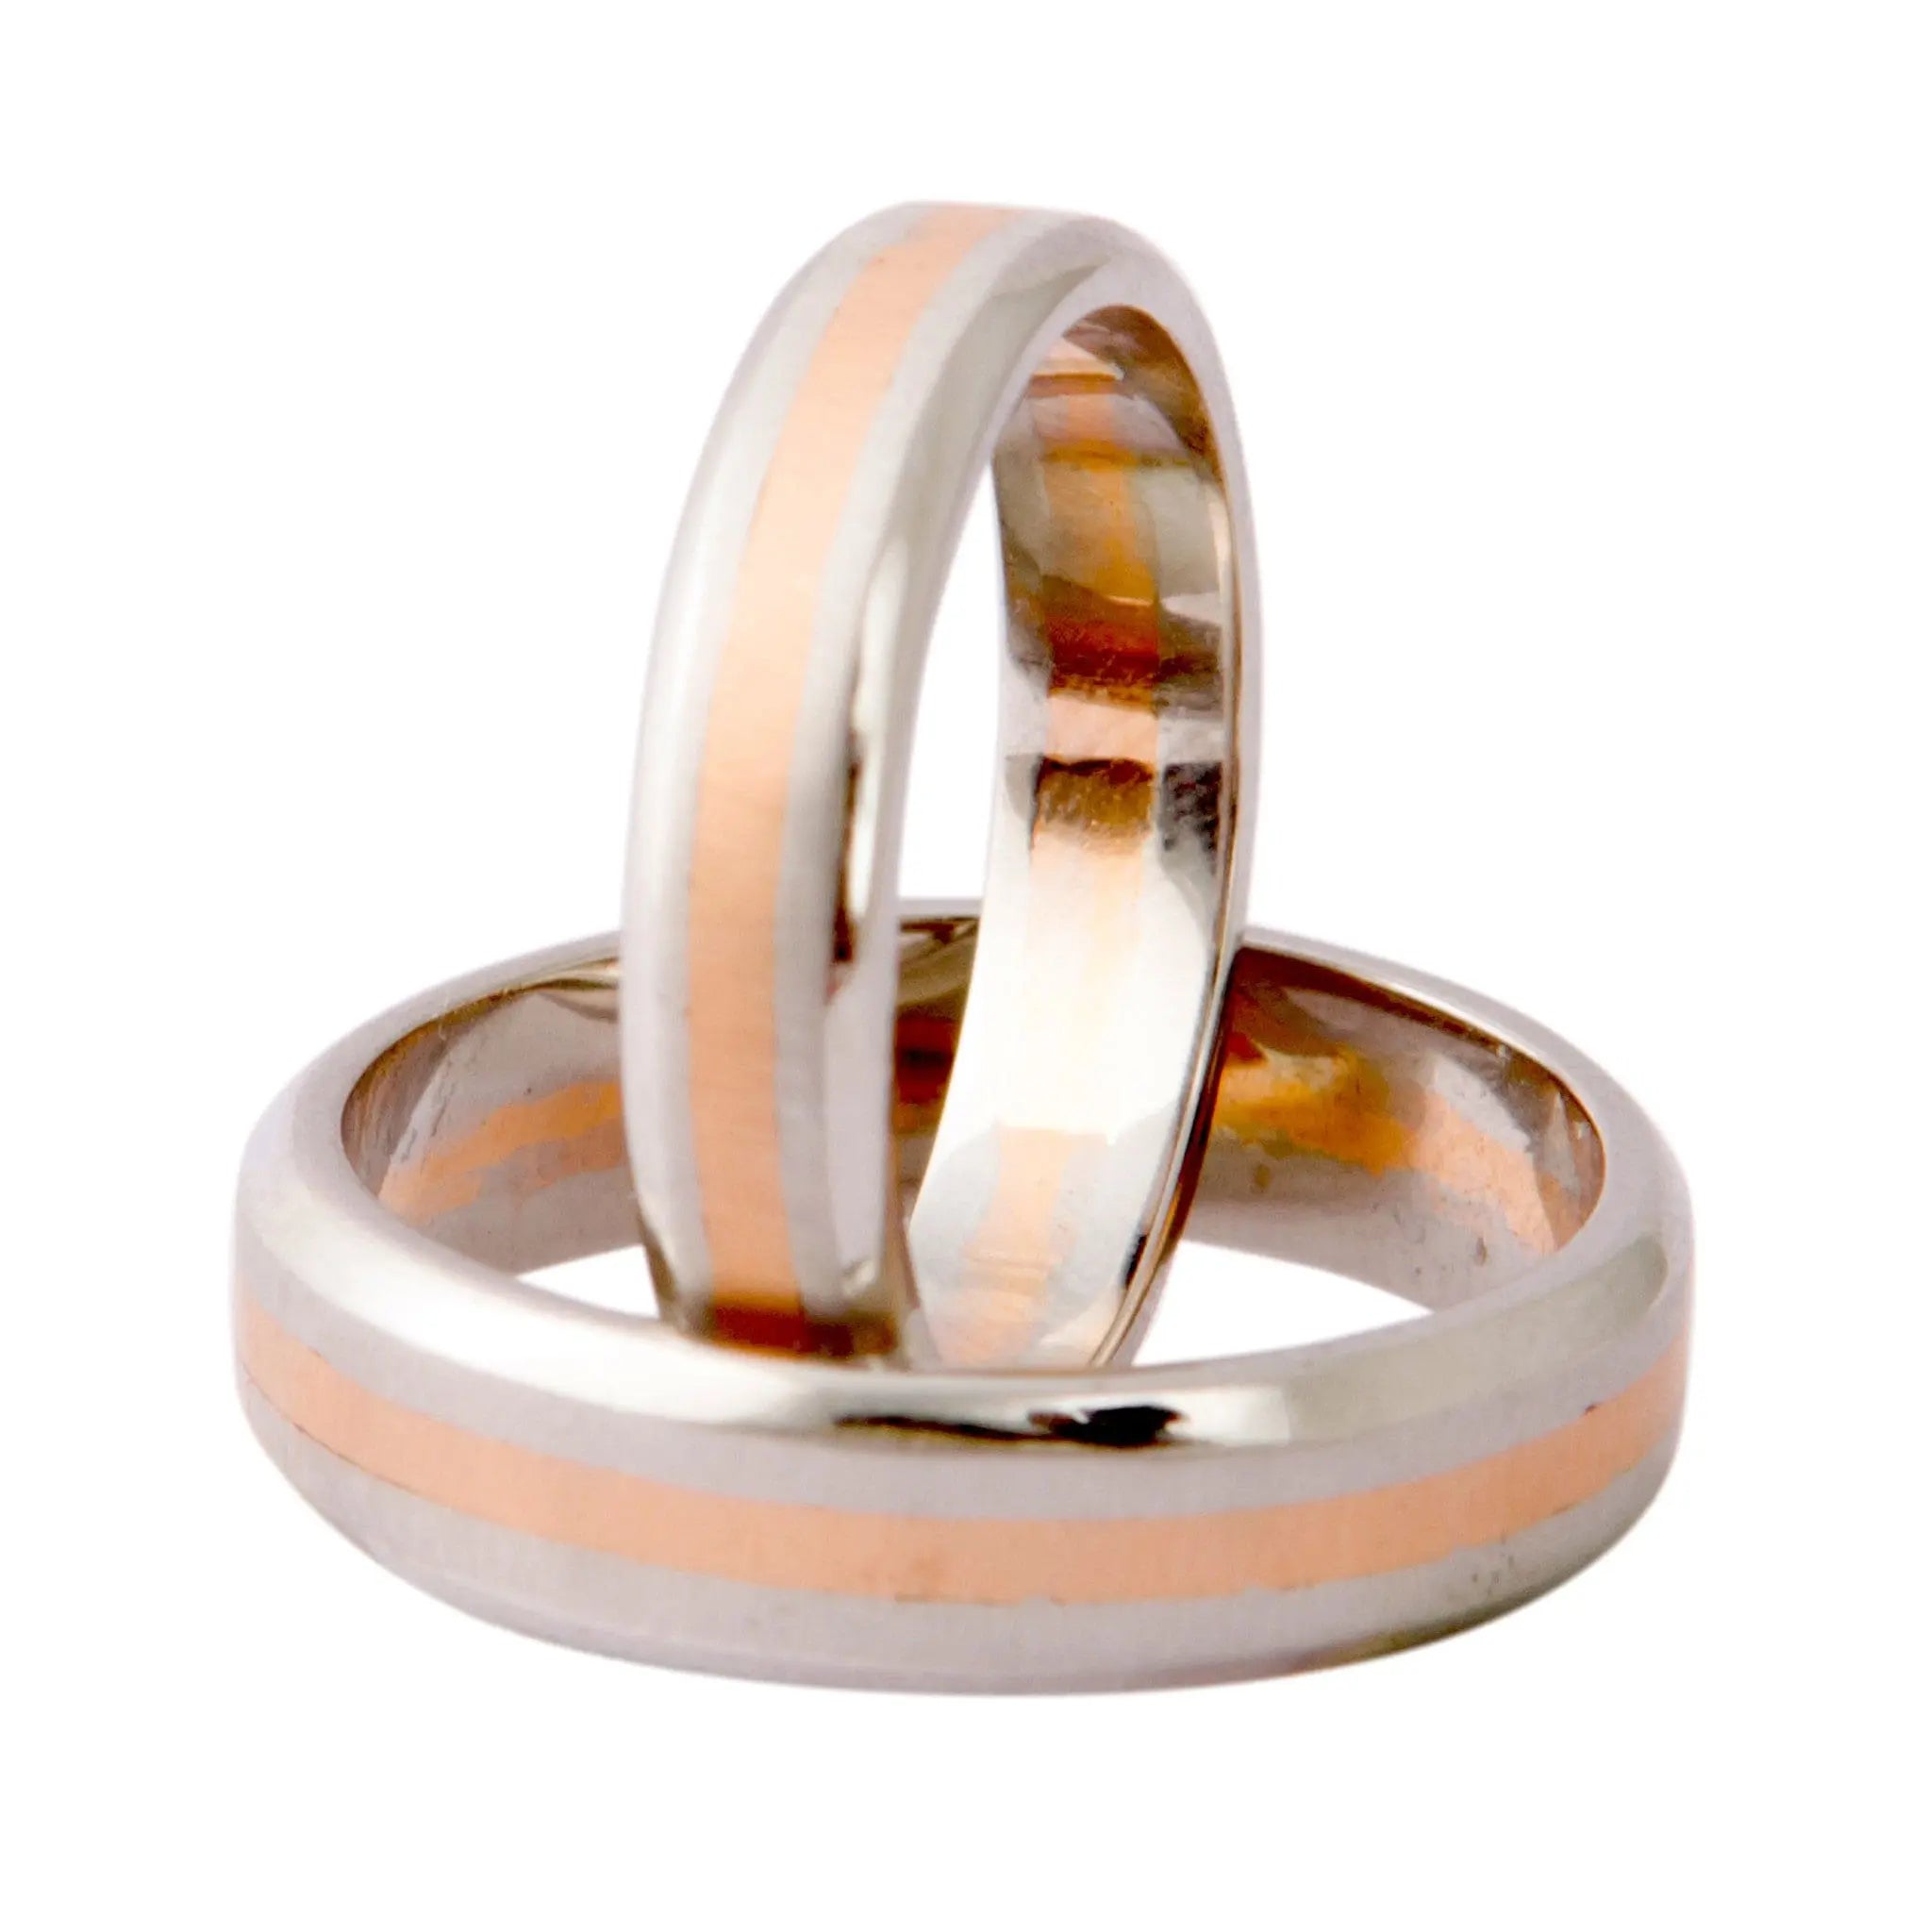 Flame Round Diamond Engagement Ring, Platinum & Rose Gold - Graff